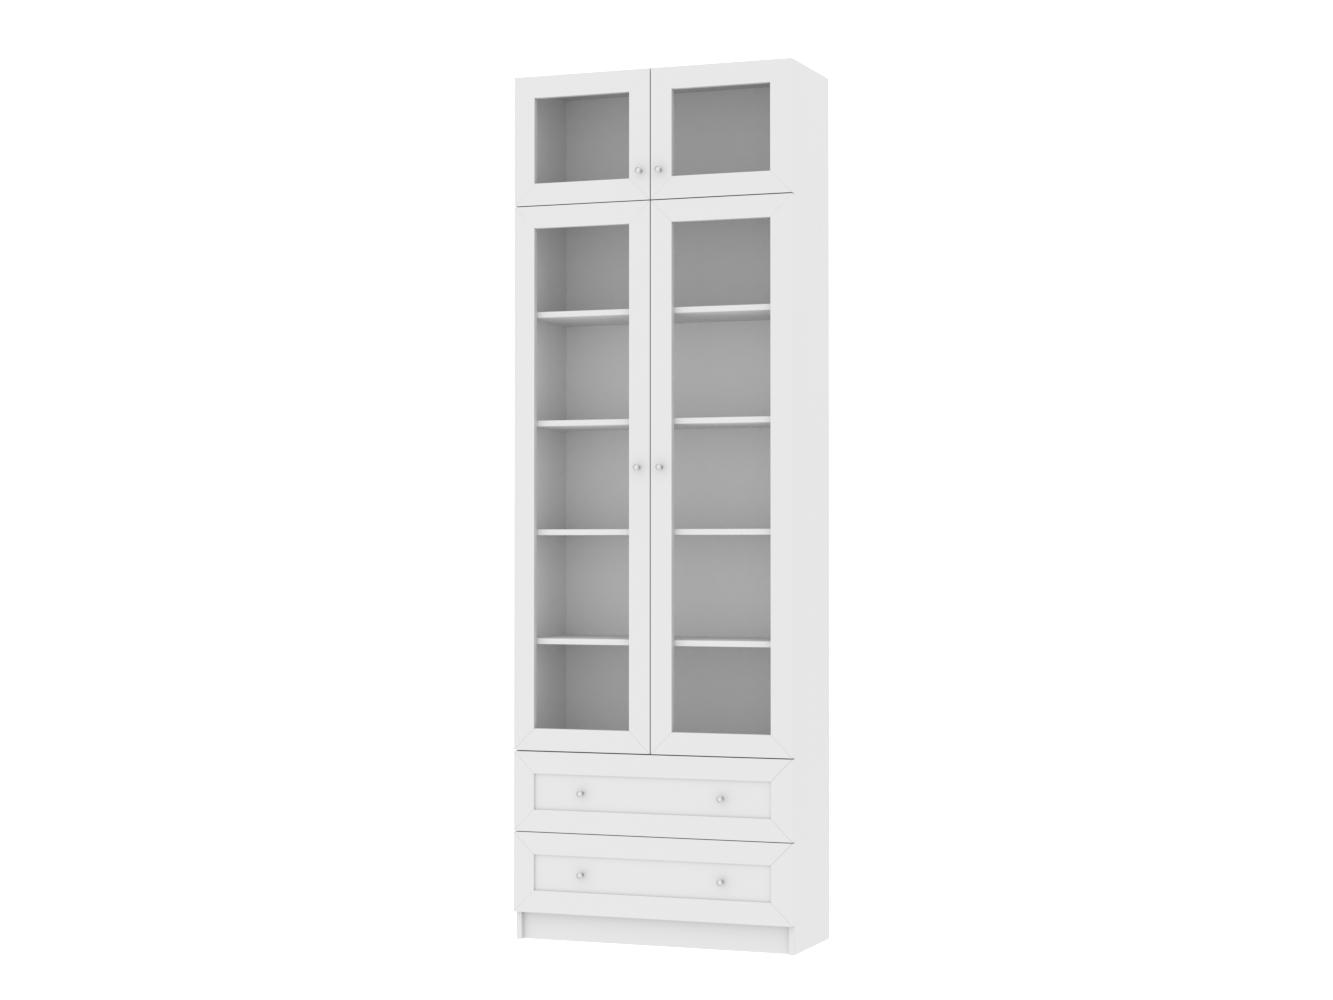 Книжный шкаф Билли 321 white ИКЕА (IKEA) изображение товара